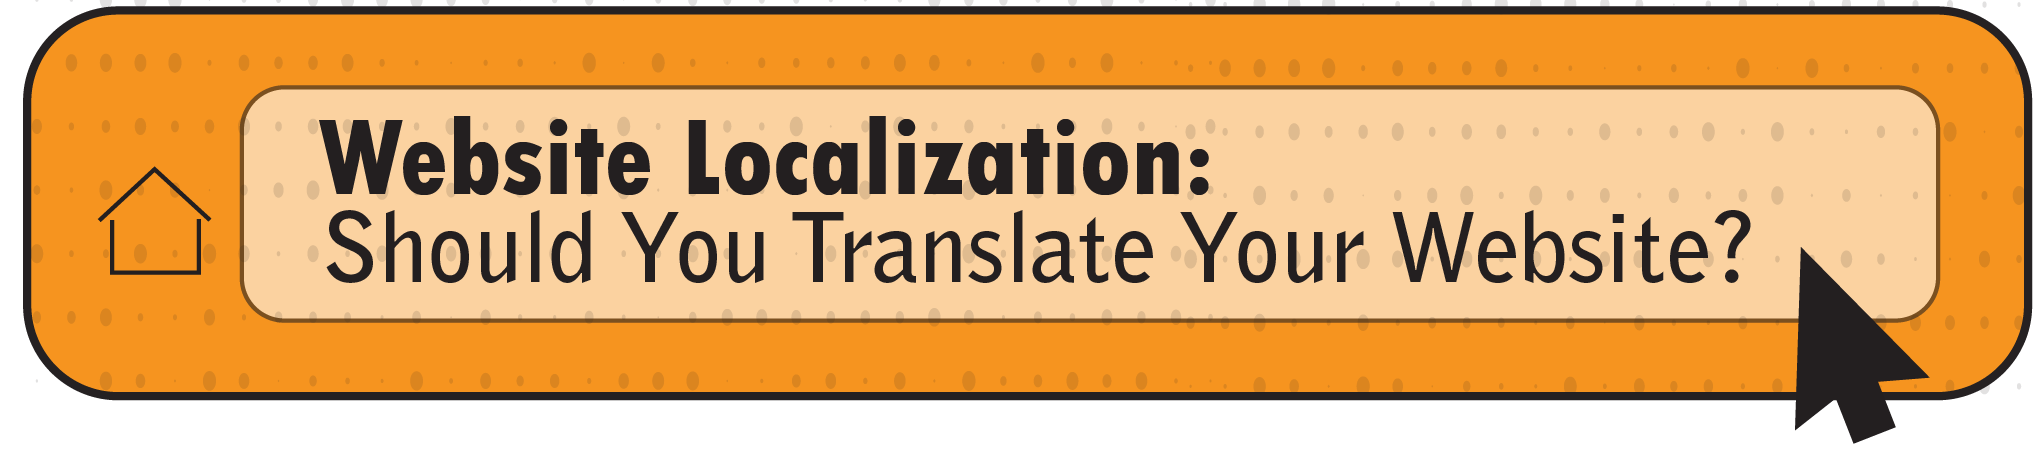 translate your website